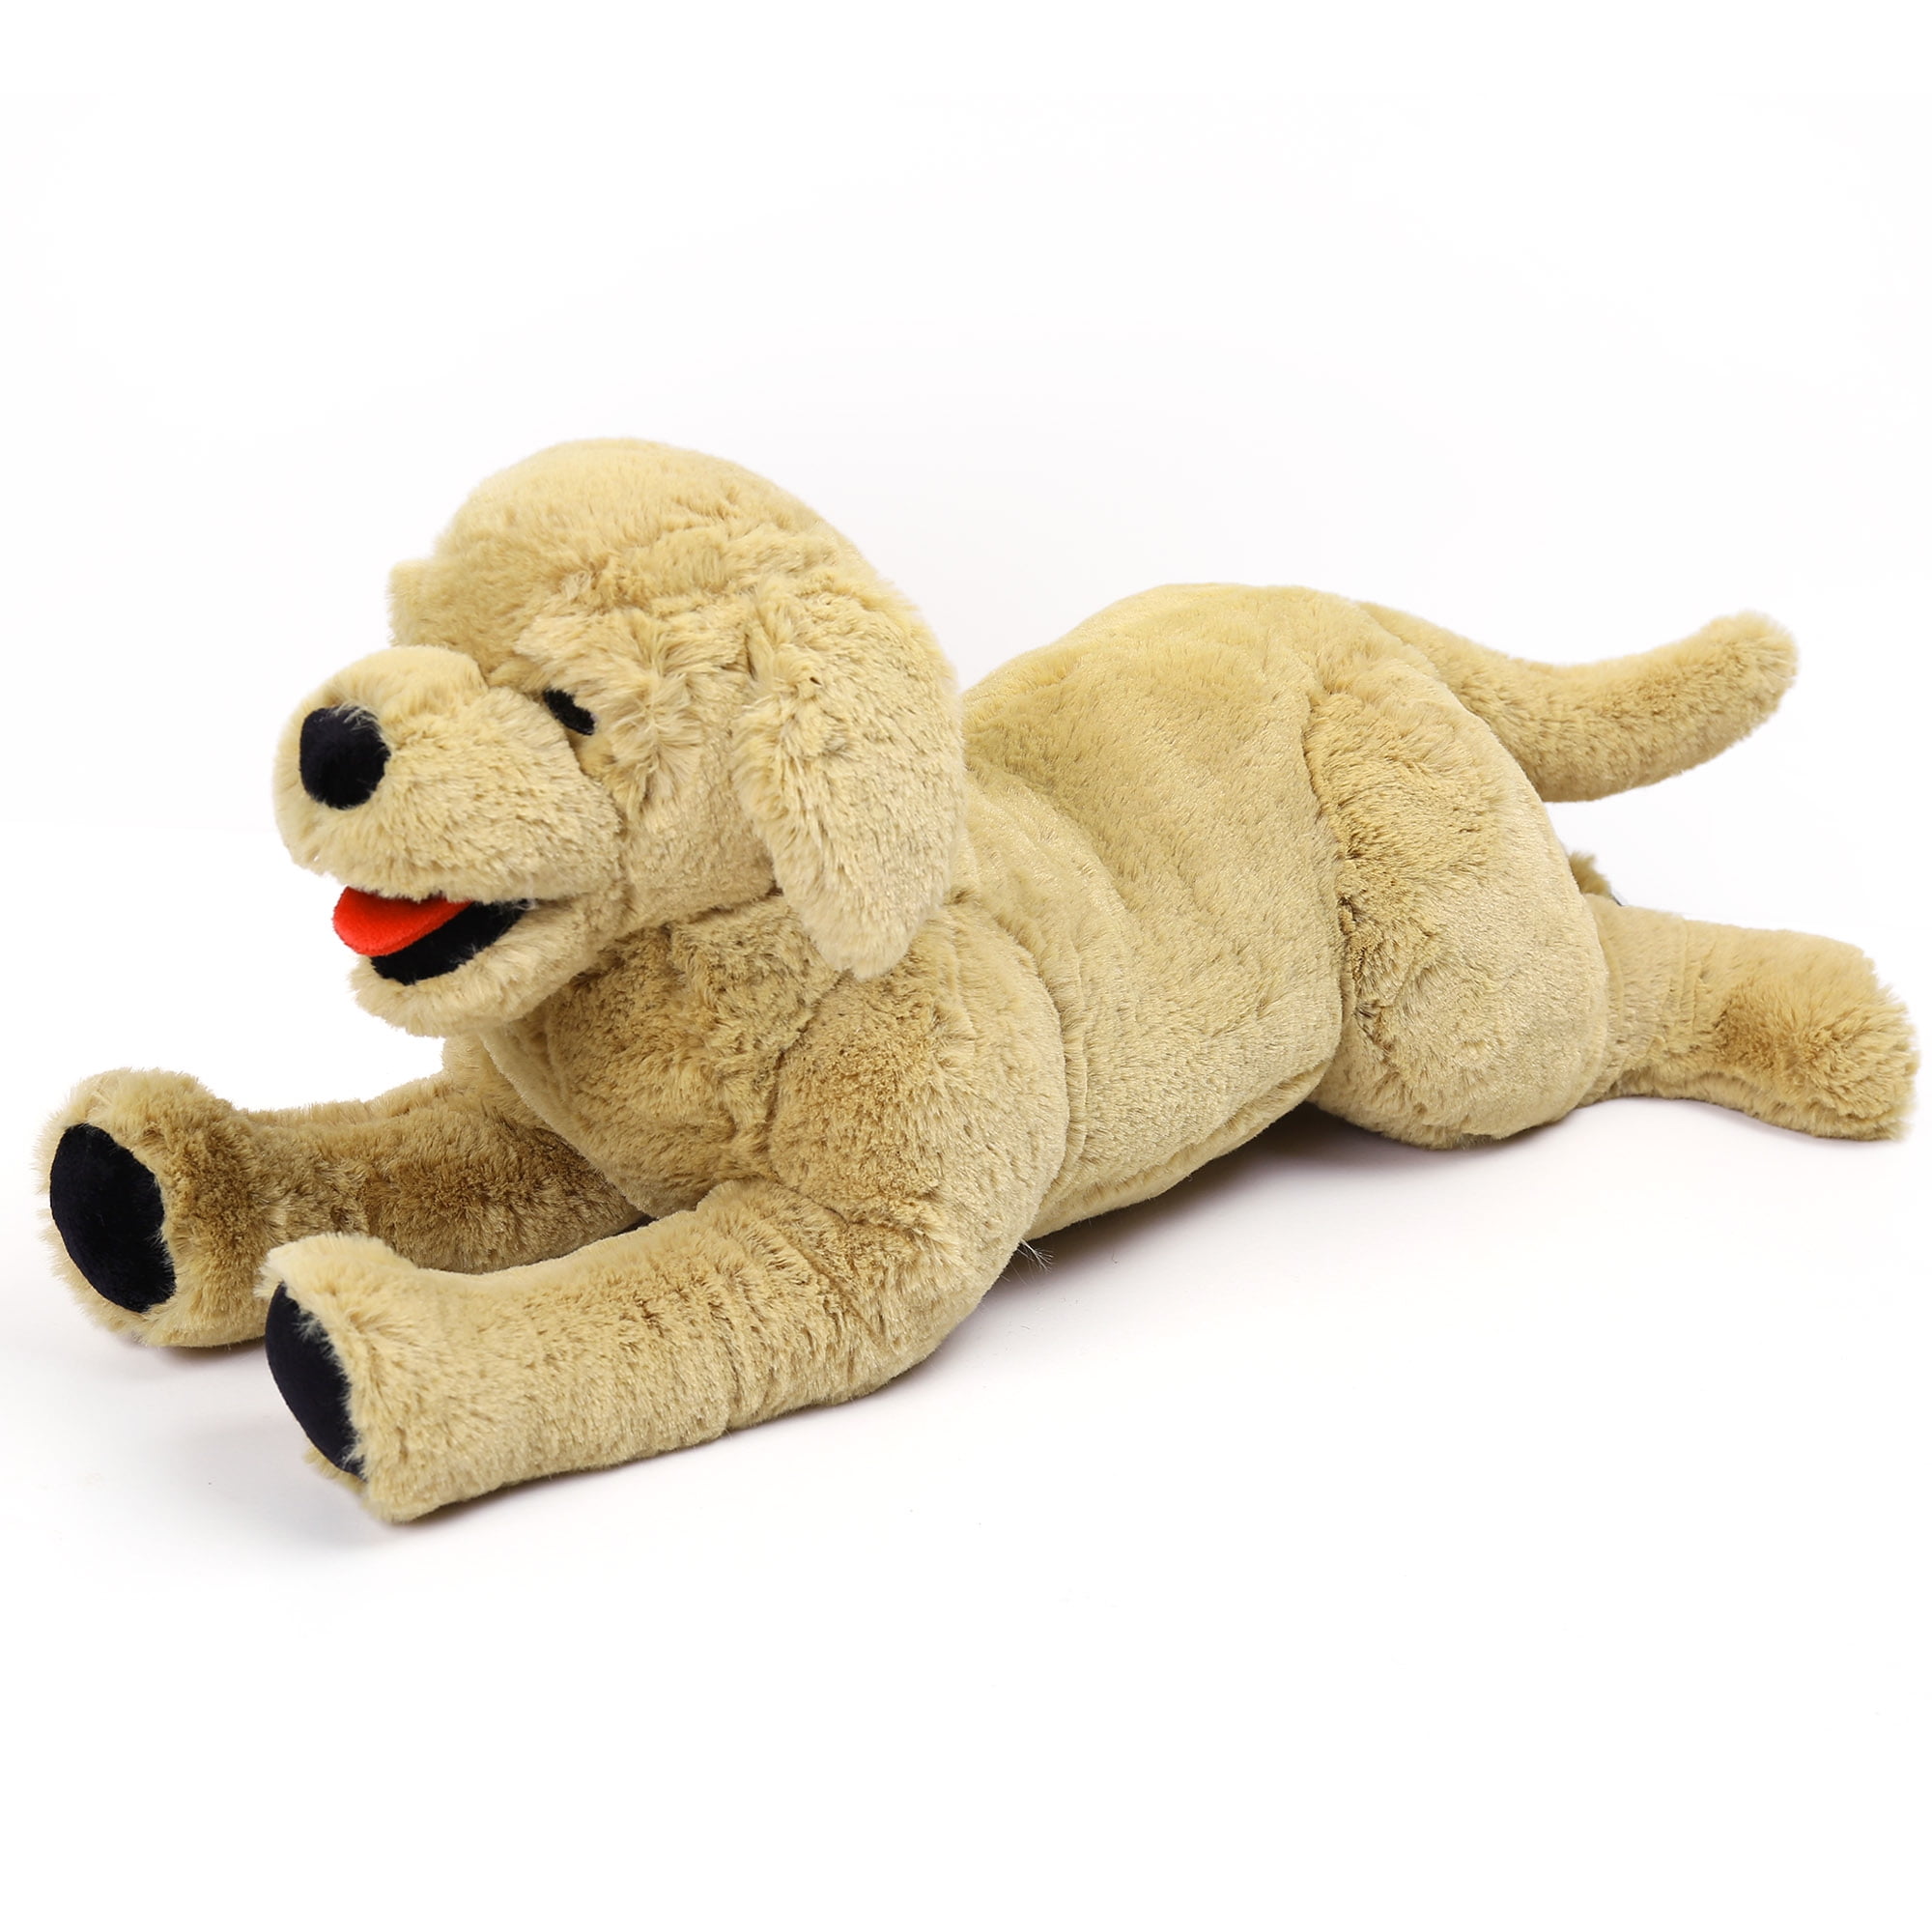 21 in Large Dog Stuffed Animals Plush, Soft Cuddly Golden Retriever Plush Toys, Stuffed Puppy